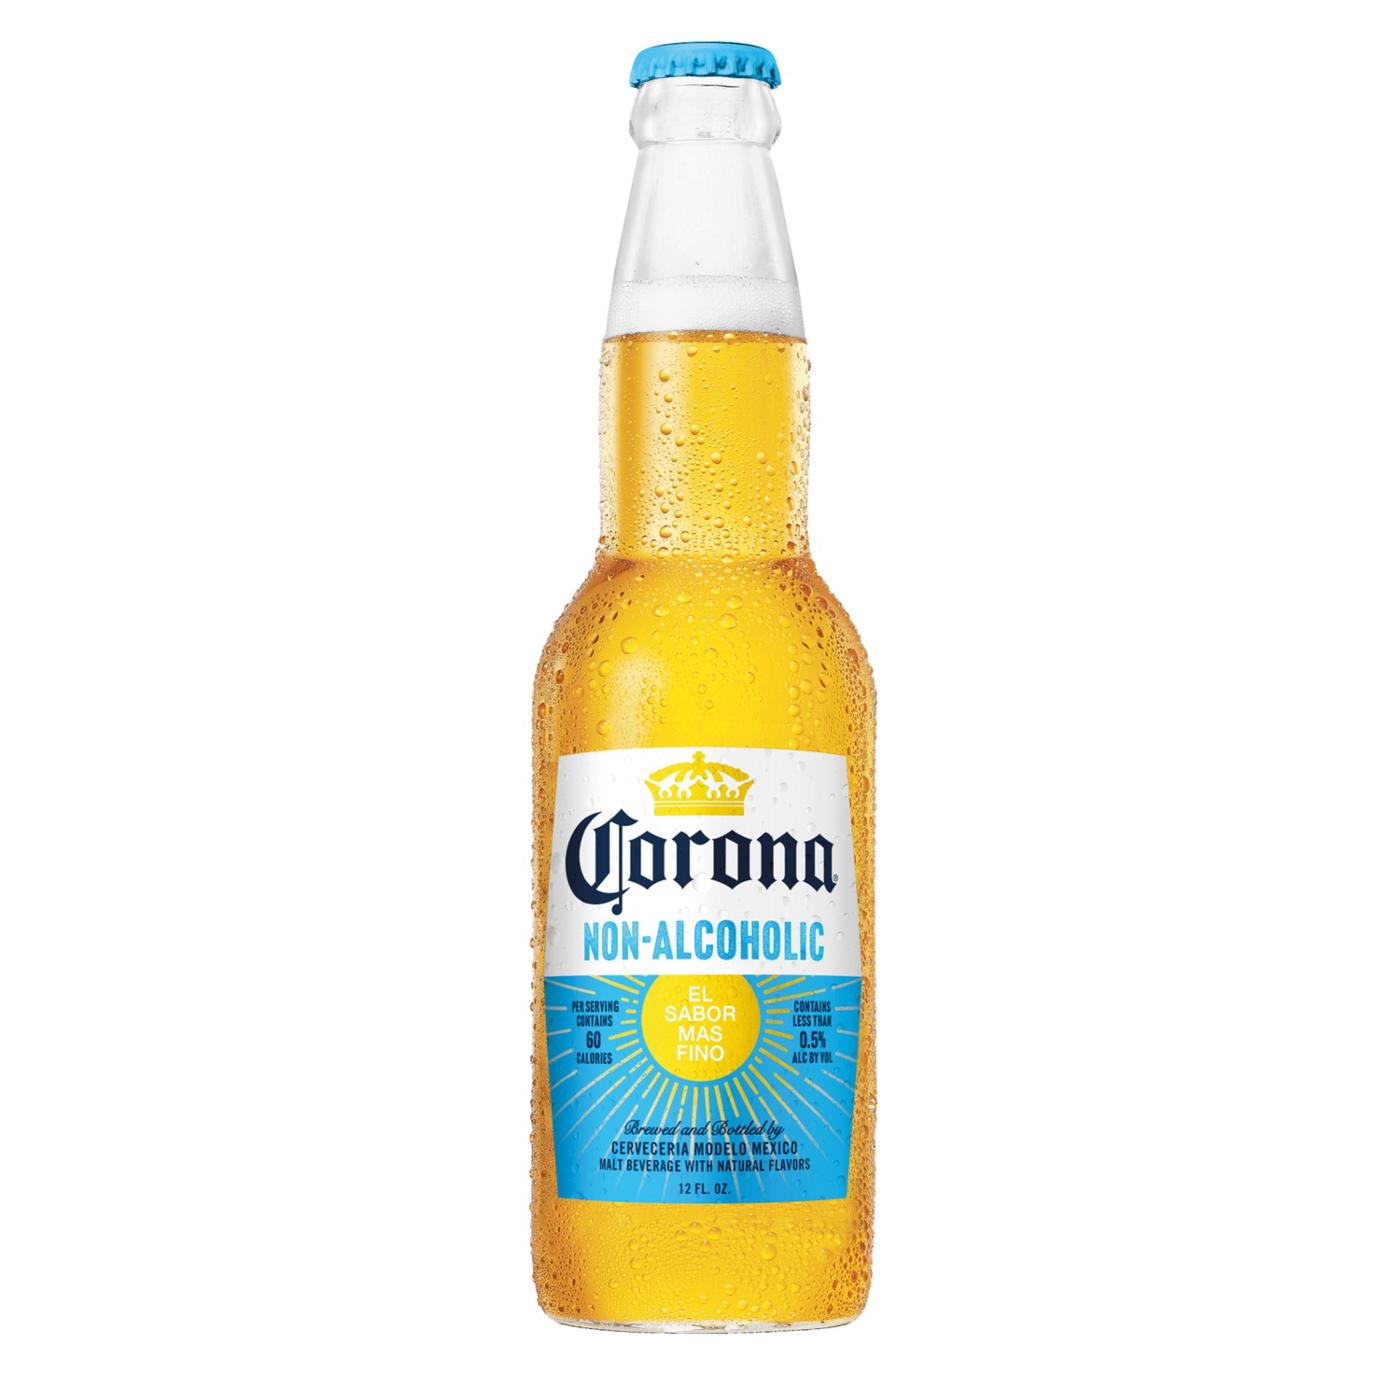 Corona Non-Alcoholic Malt Beverage Mexican Import Brew 12 oz Bottles, 6 pk; image 2 of 11